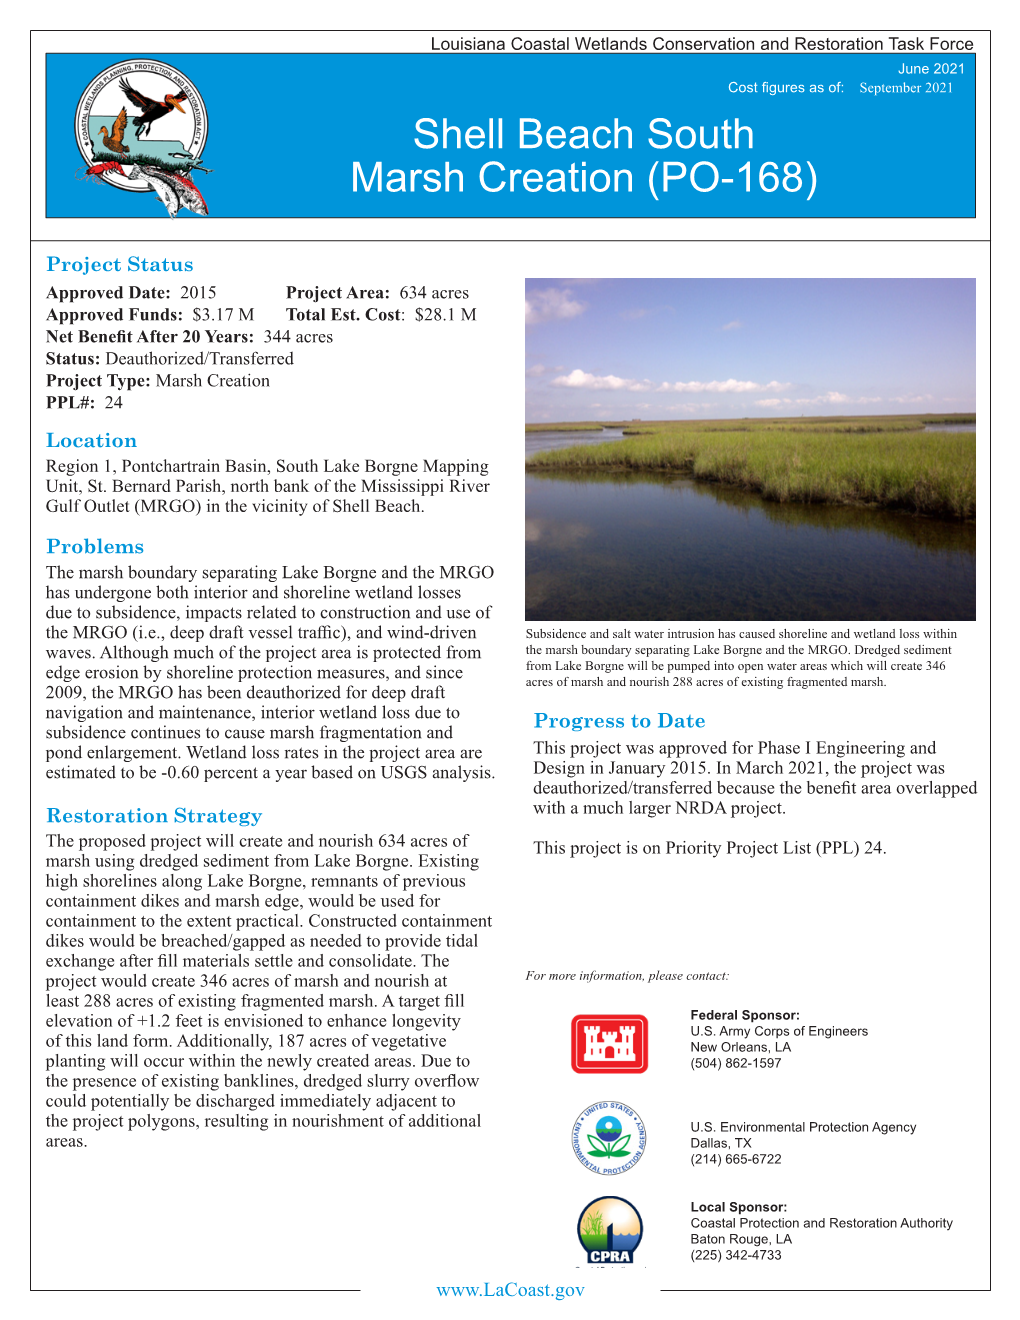 Shell Beach South Marsh Creation (PO-168)